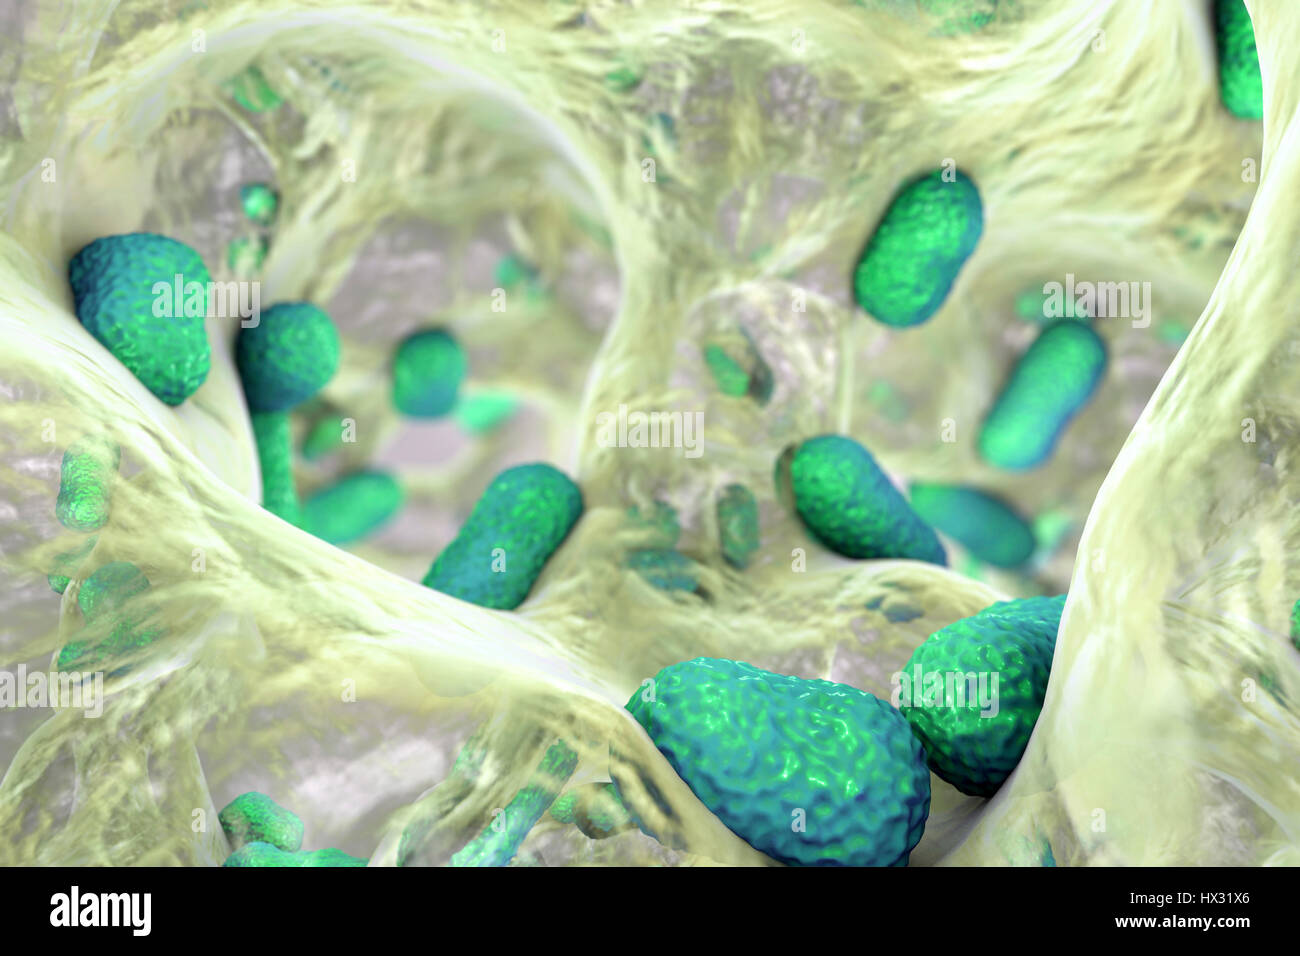 Multi-drug resistant Acinetobacter baumannii bacteria inside biofilm ...